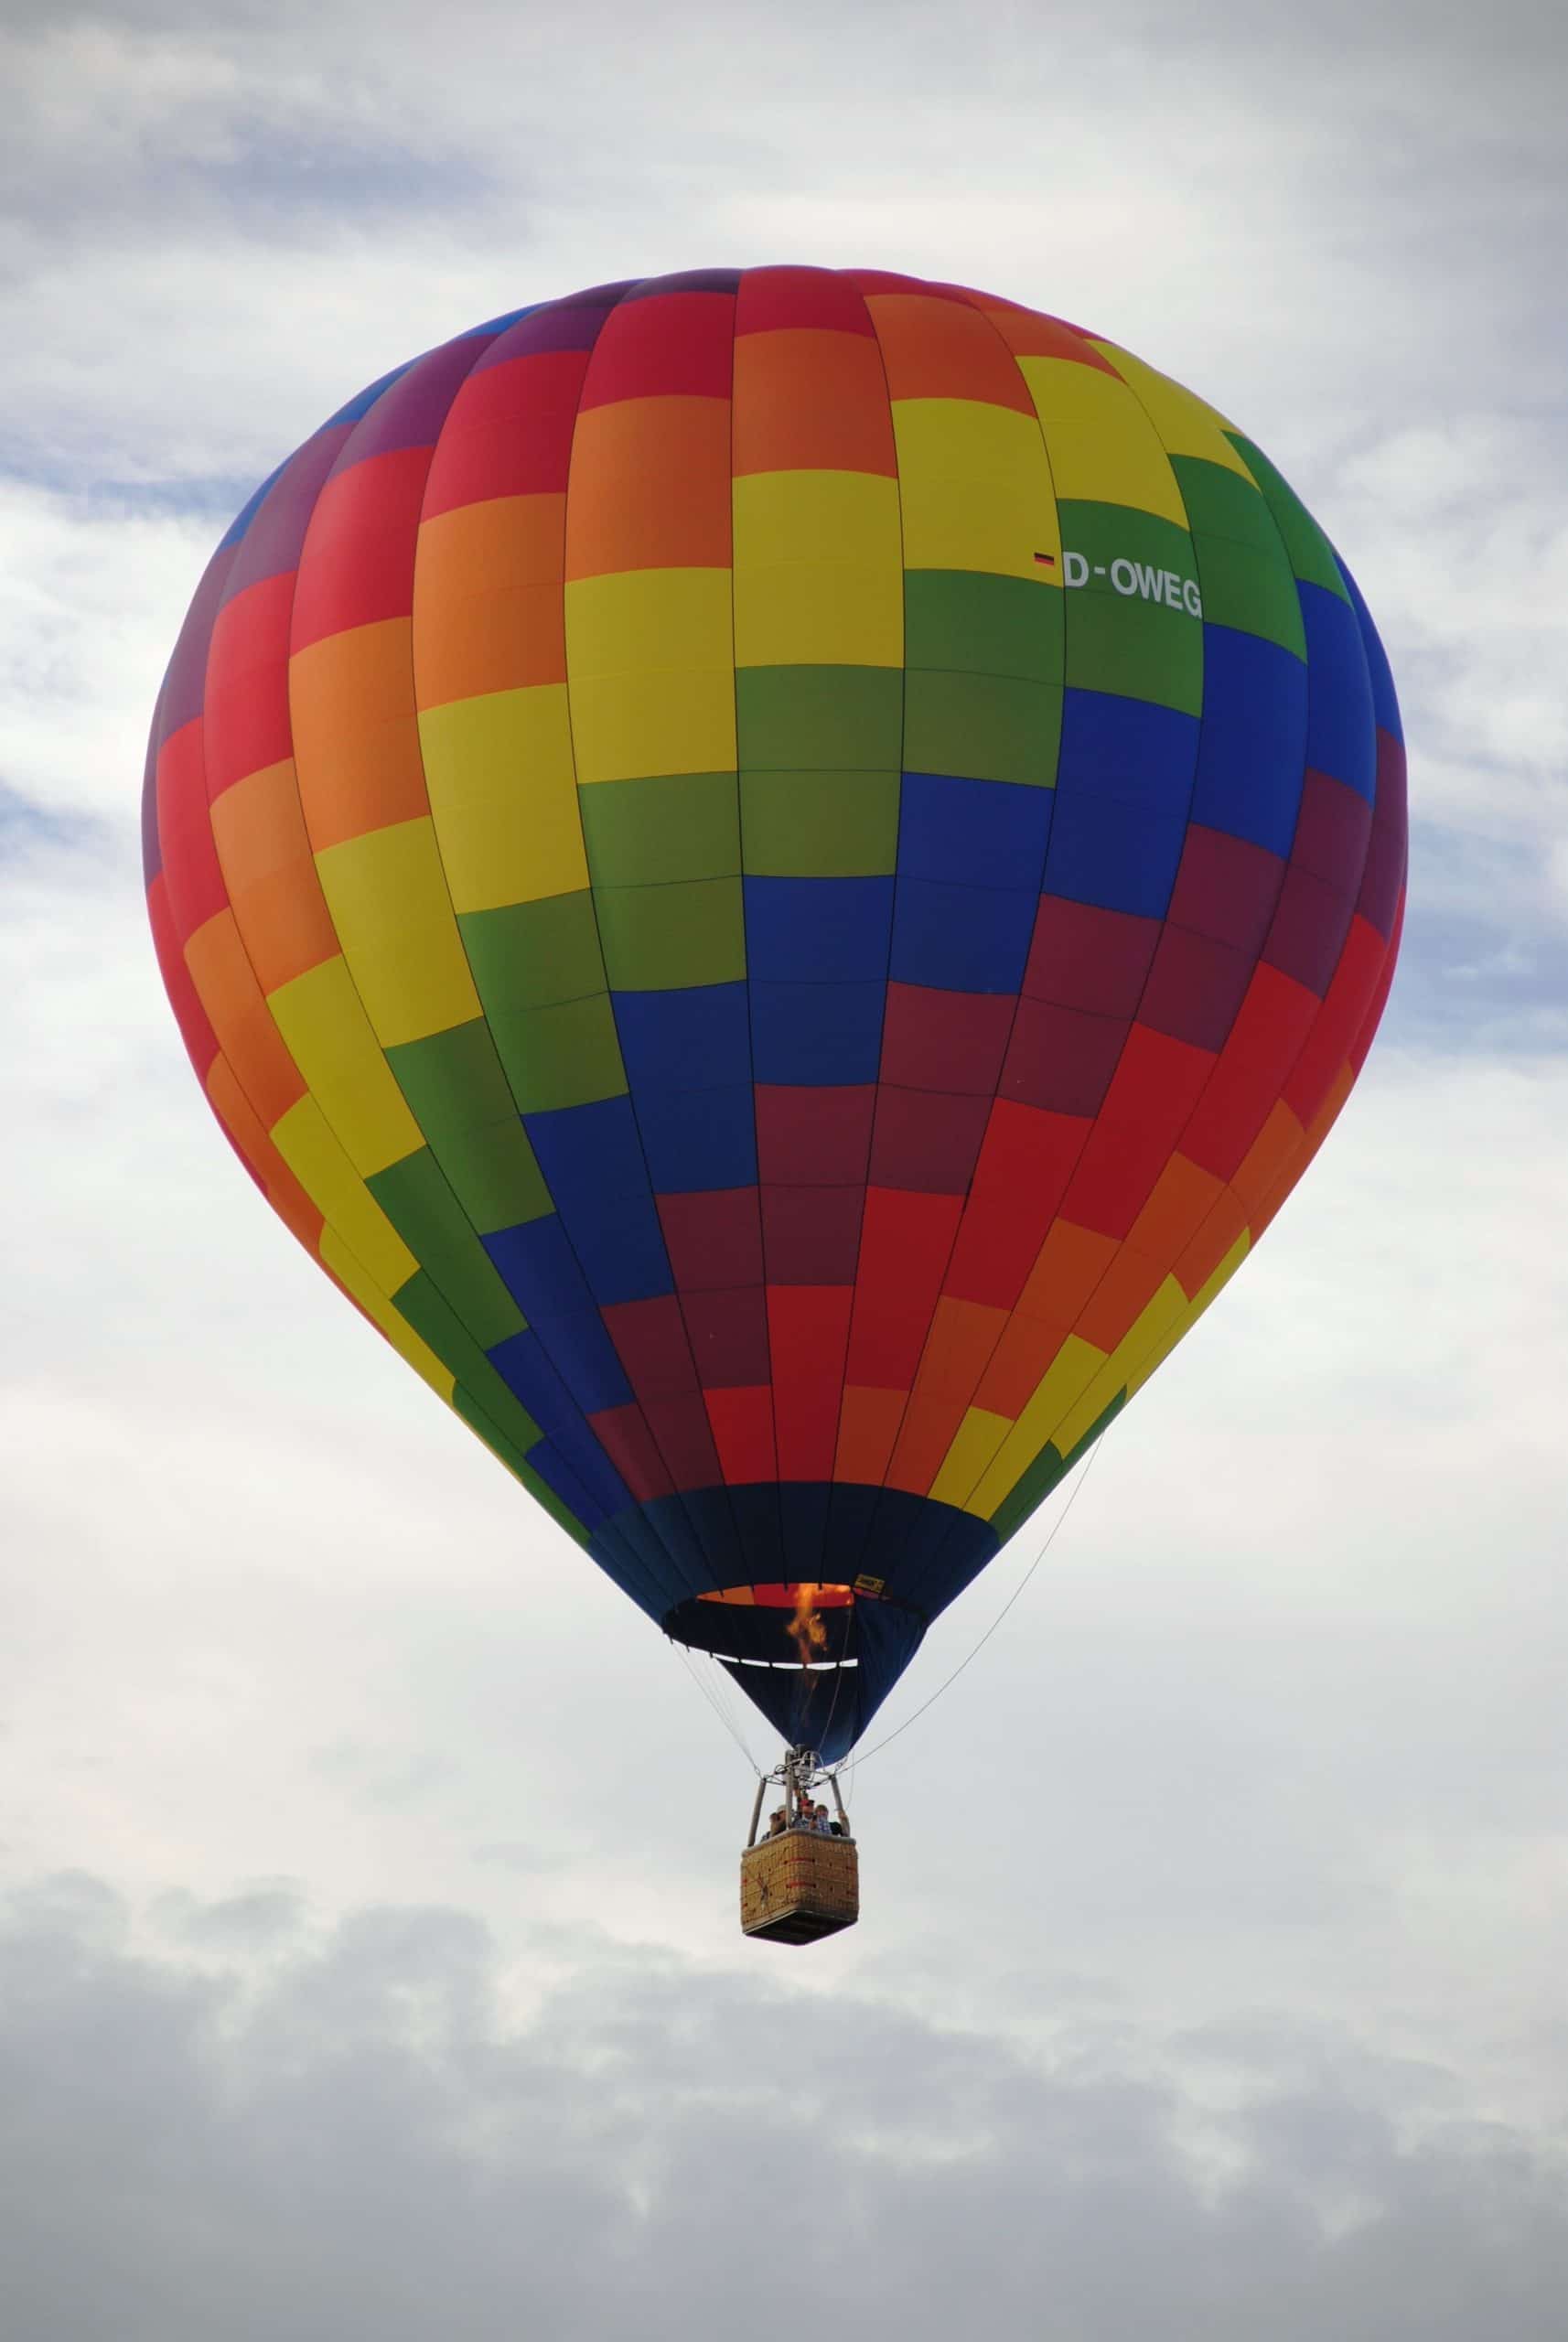 A single hot air balloon in flight